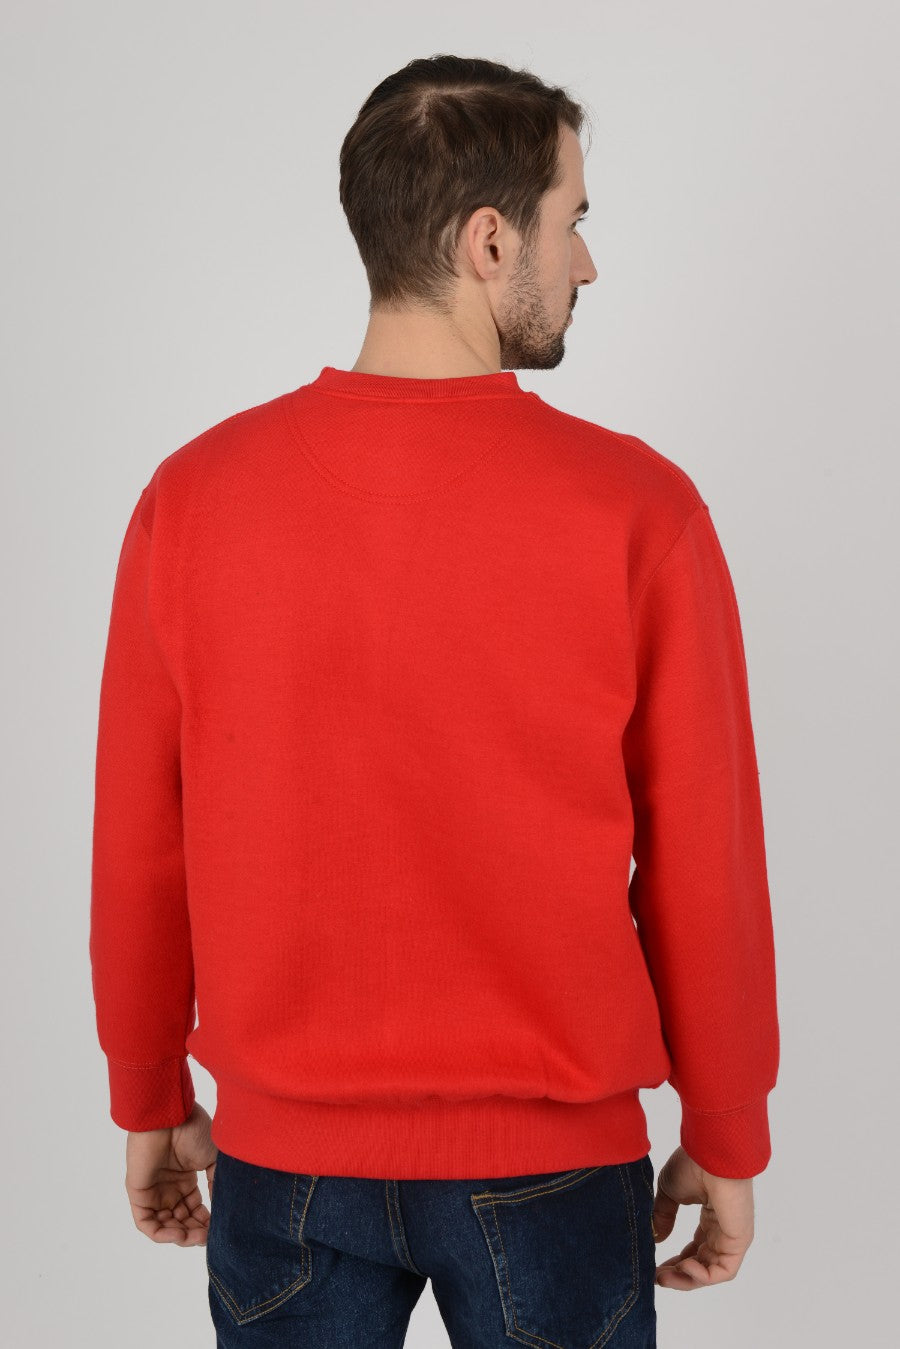 Mens-Plain-Fleece-Sweatshirt-Casual-Red